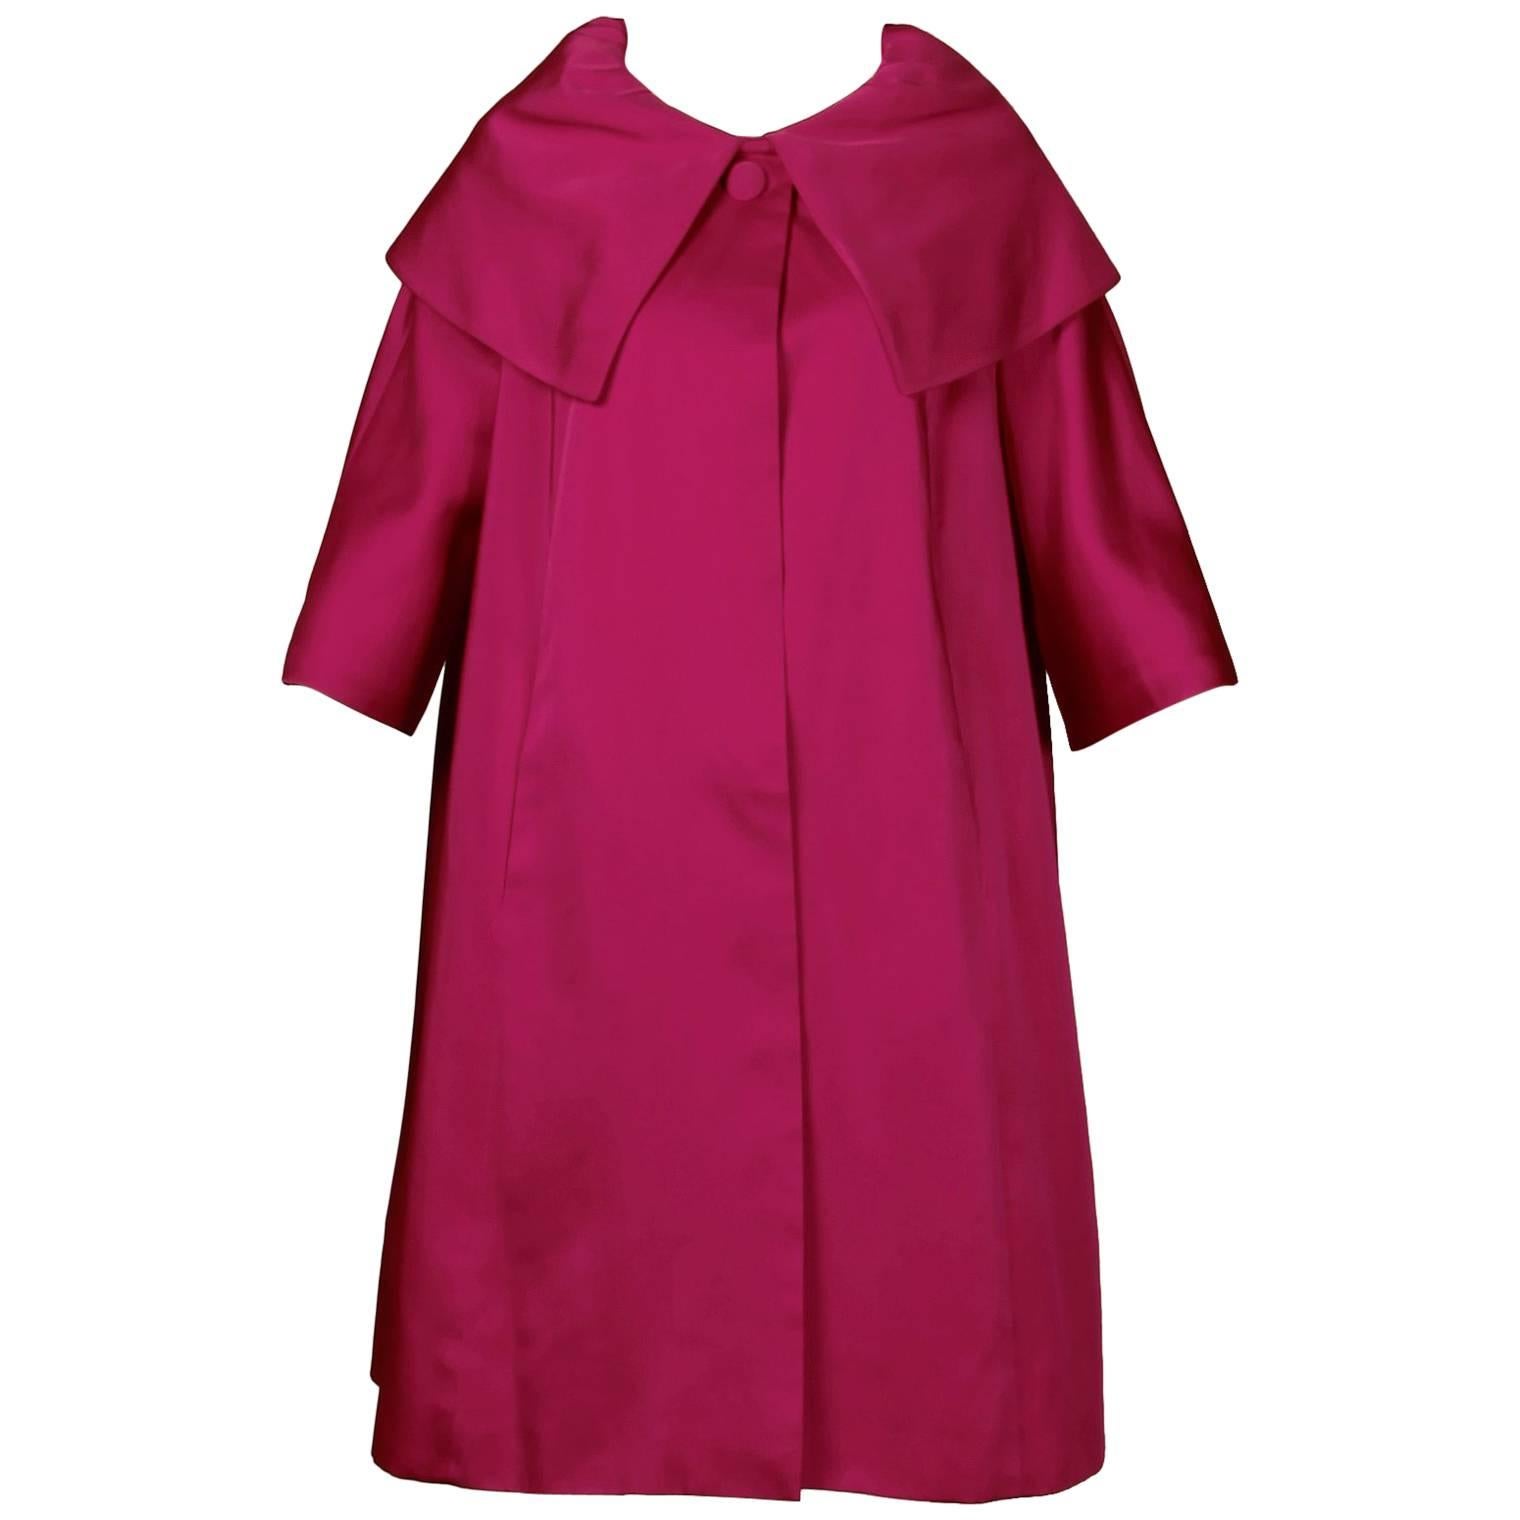 1960s Sandra Sage Vintage Fuchsia Pink Silk Satin Swing Coat with Pop Up Collar